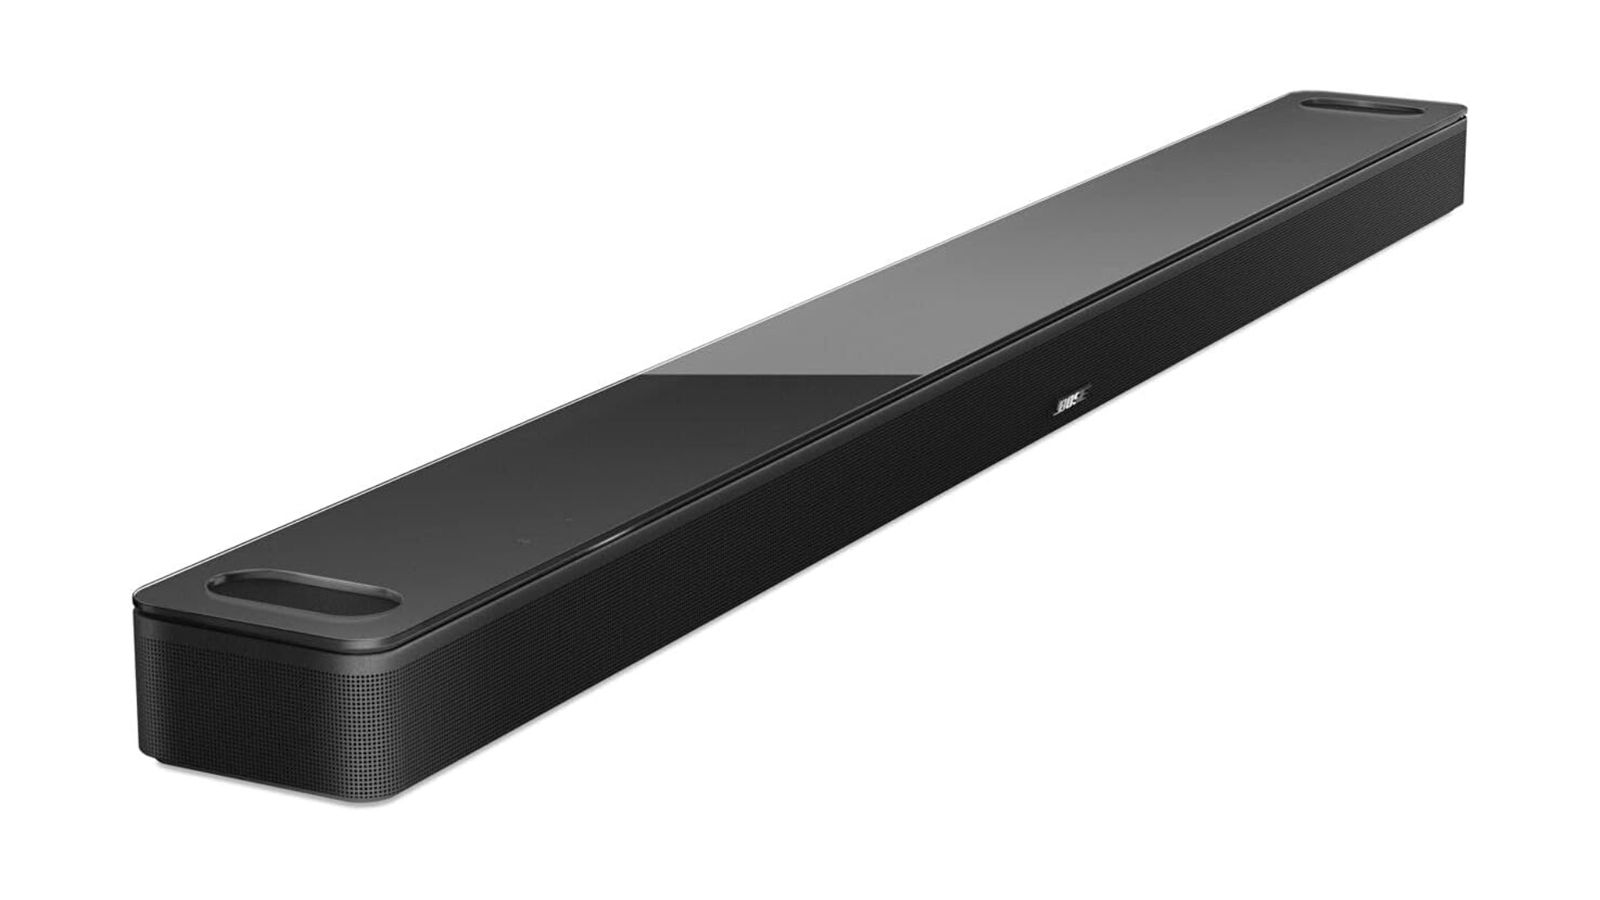 Bose Soundbar 900 product image of a long, flat, black soundbar.